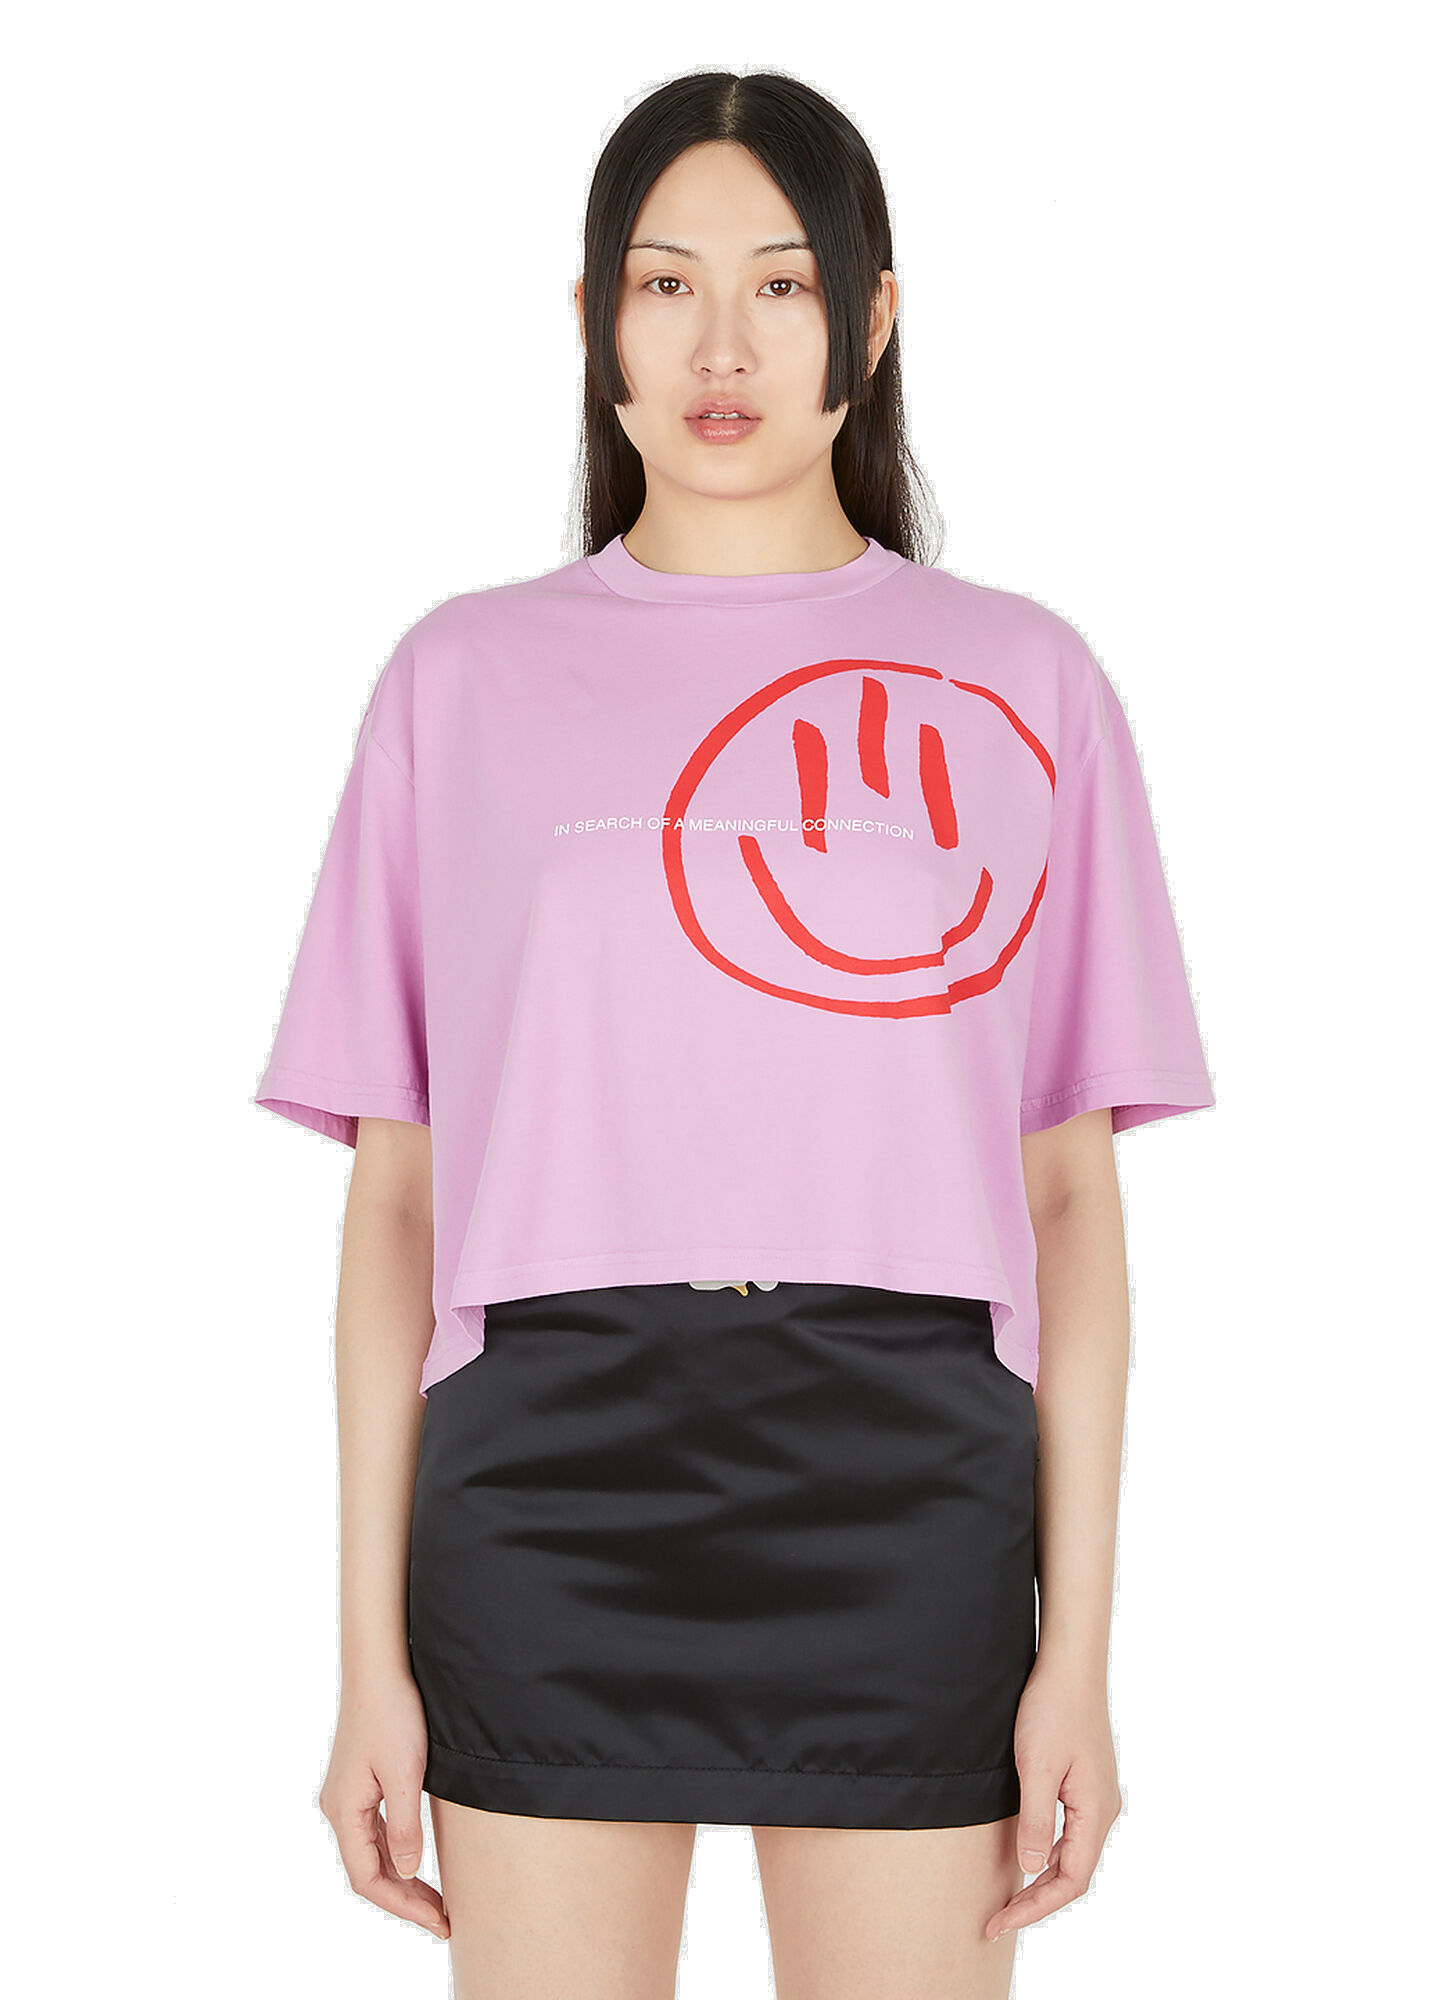 Photo: Third Eye Cropped T-Shirt in Pink